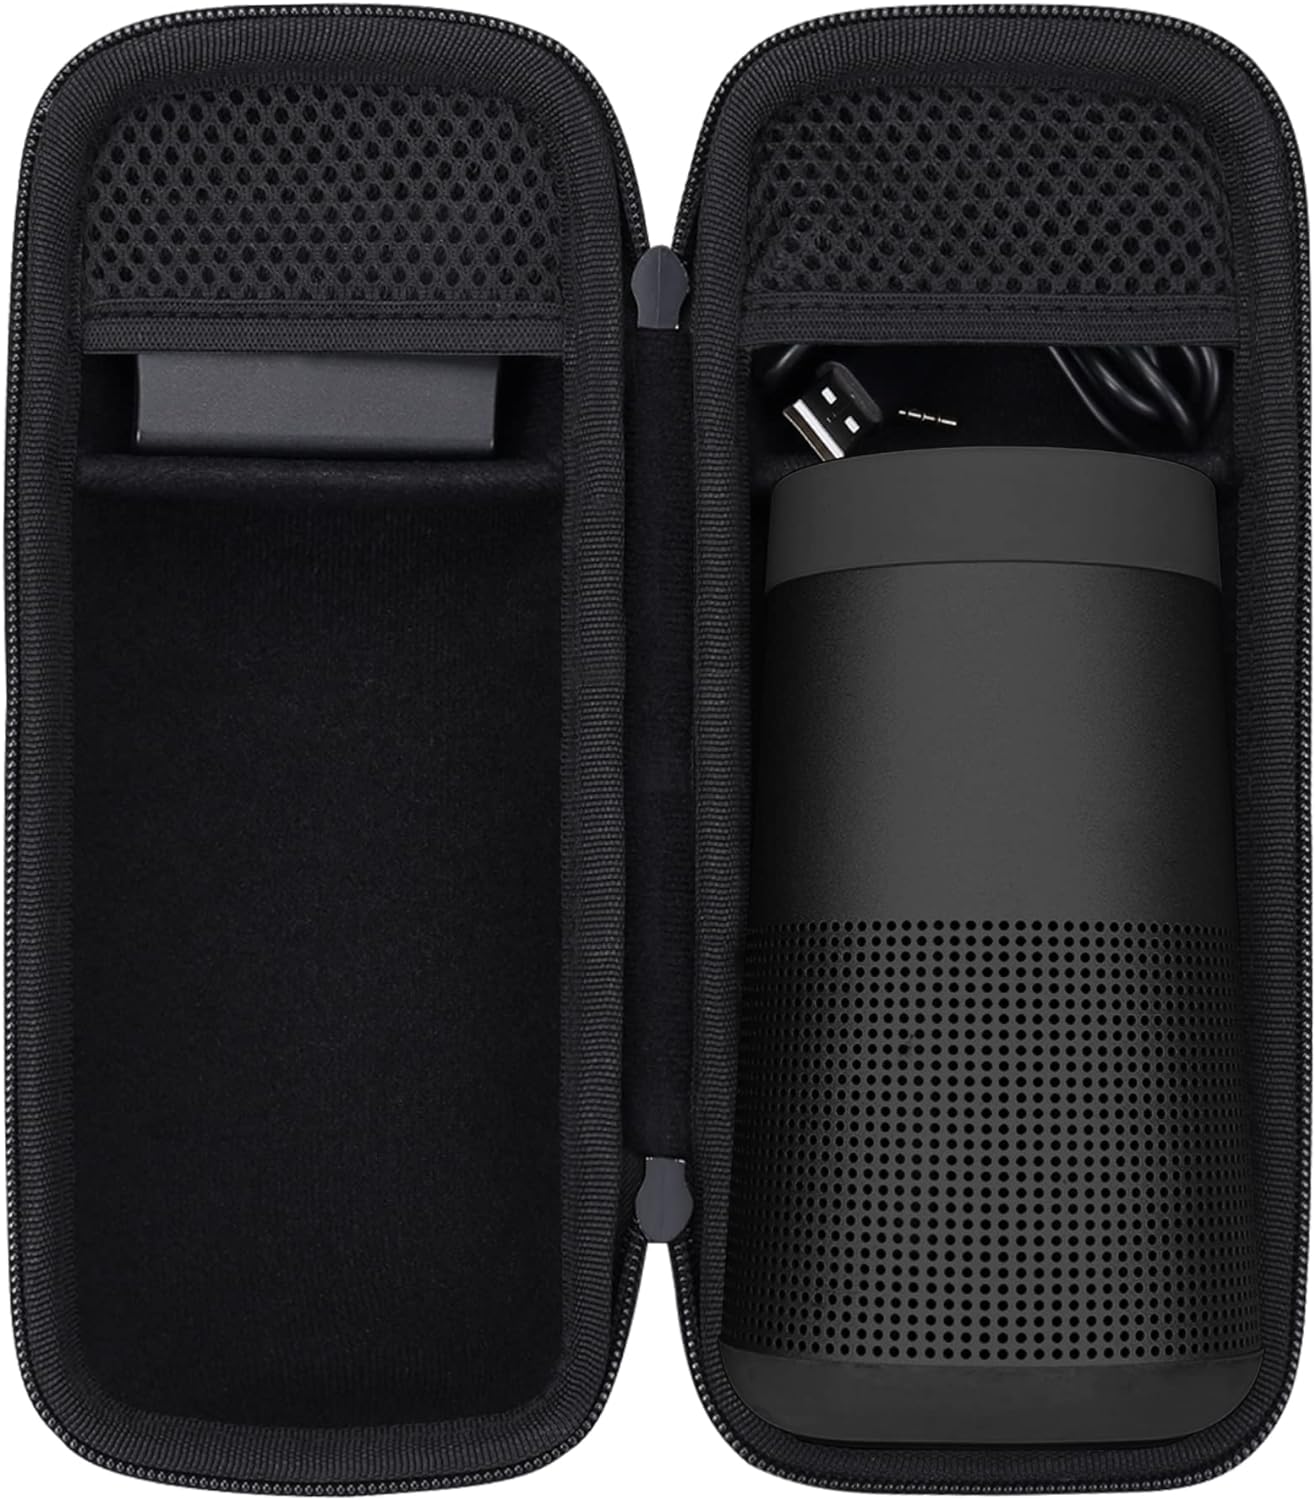 co2CREA Hard Case Replacement for Bose SoundLink Revolve Series II Portable Bluetooth Speaker, Black Case